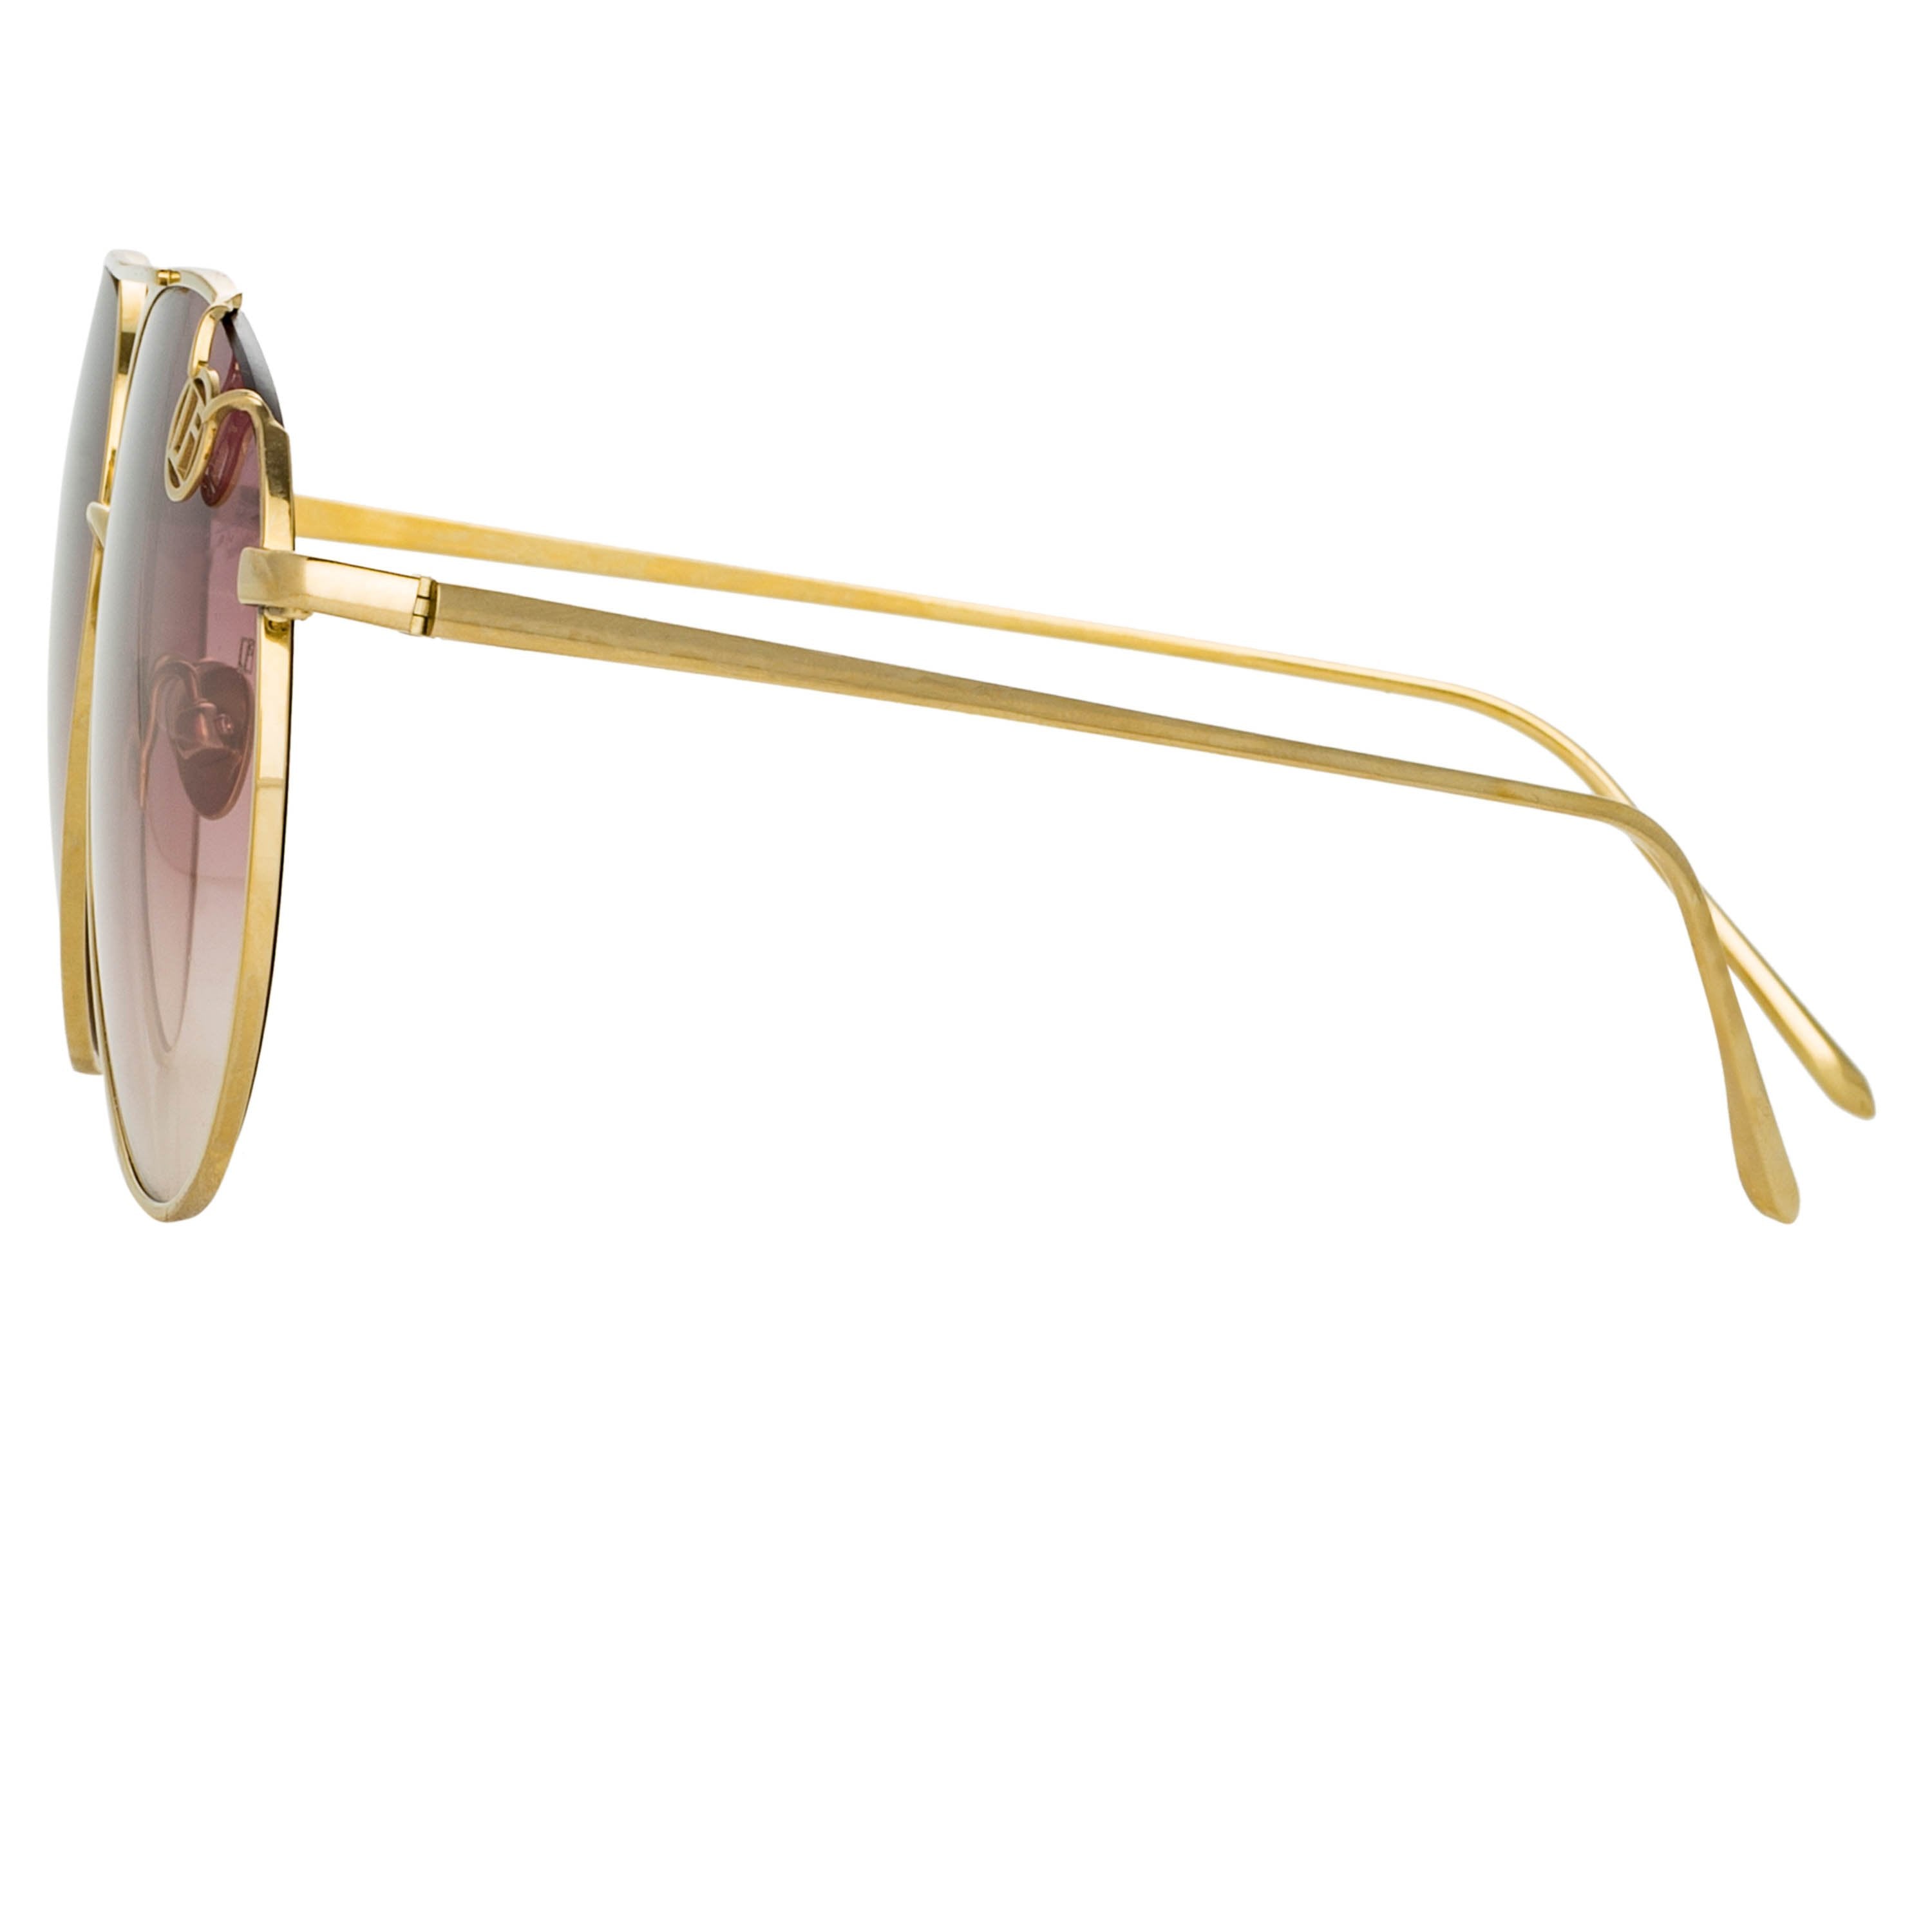 Color_LFL1055C2SUN - Joni Aviator Sunglasses in Light Gold and Burgundy